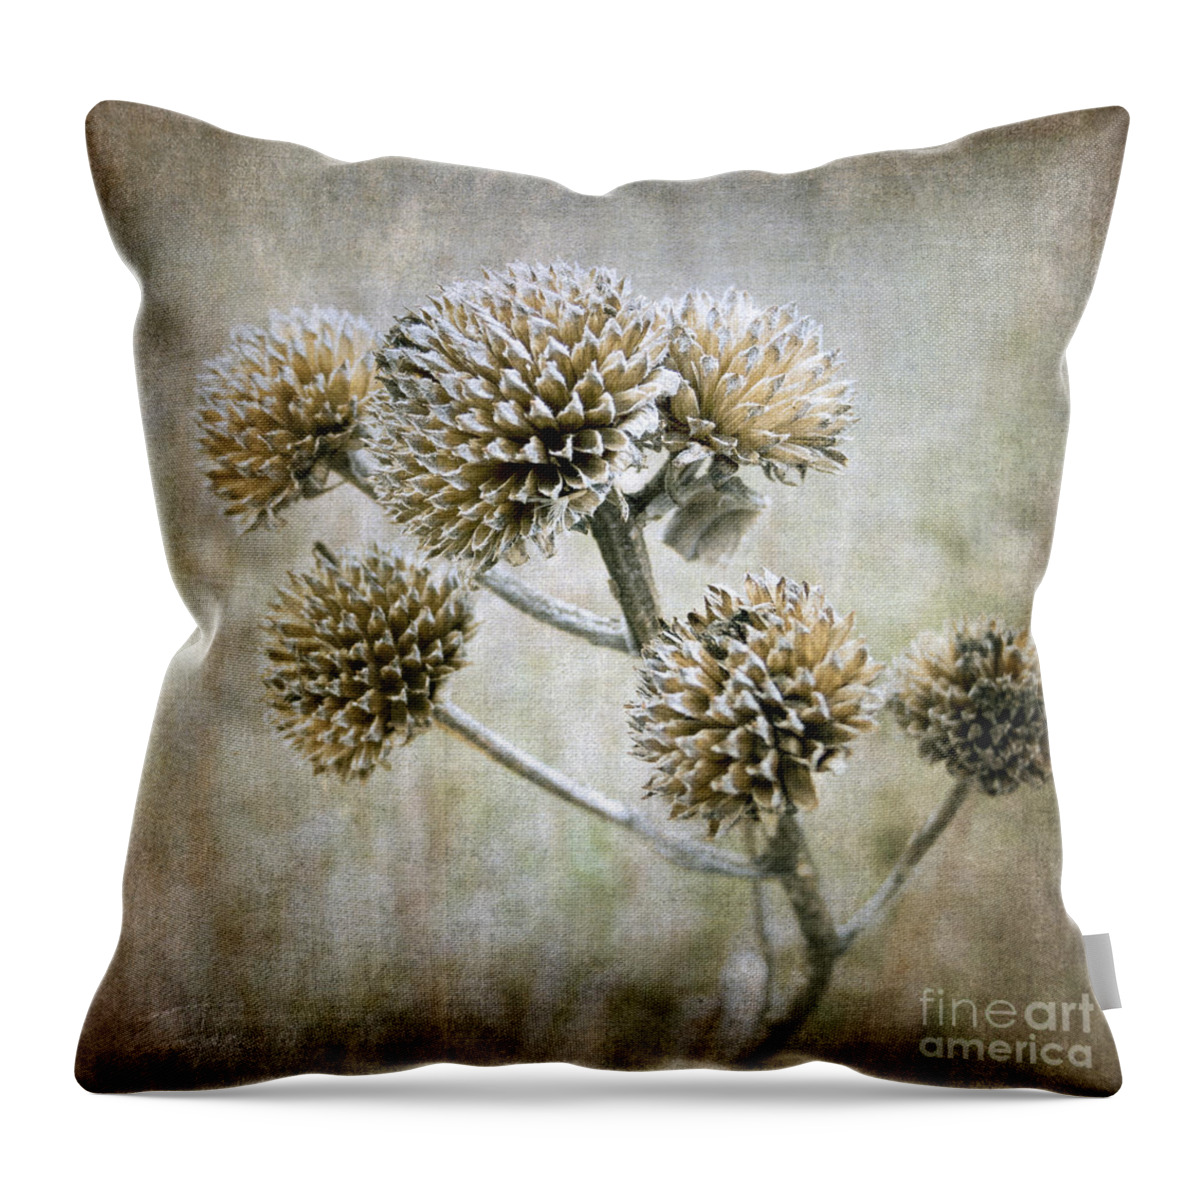 Autumn Throw Pillow featuring the photograph Autumn Seed Heads II by Tamara Becker